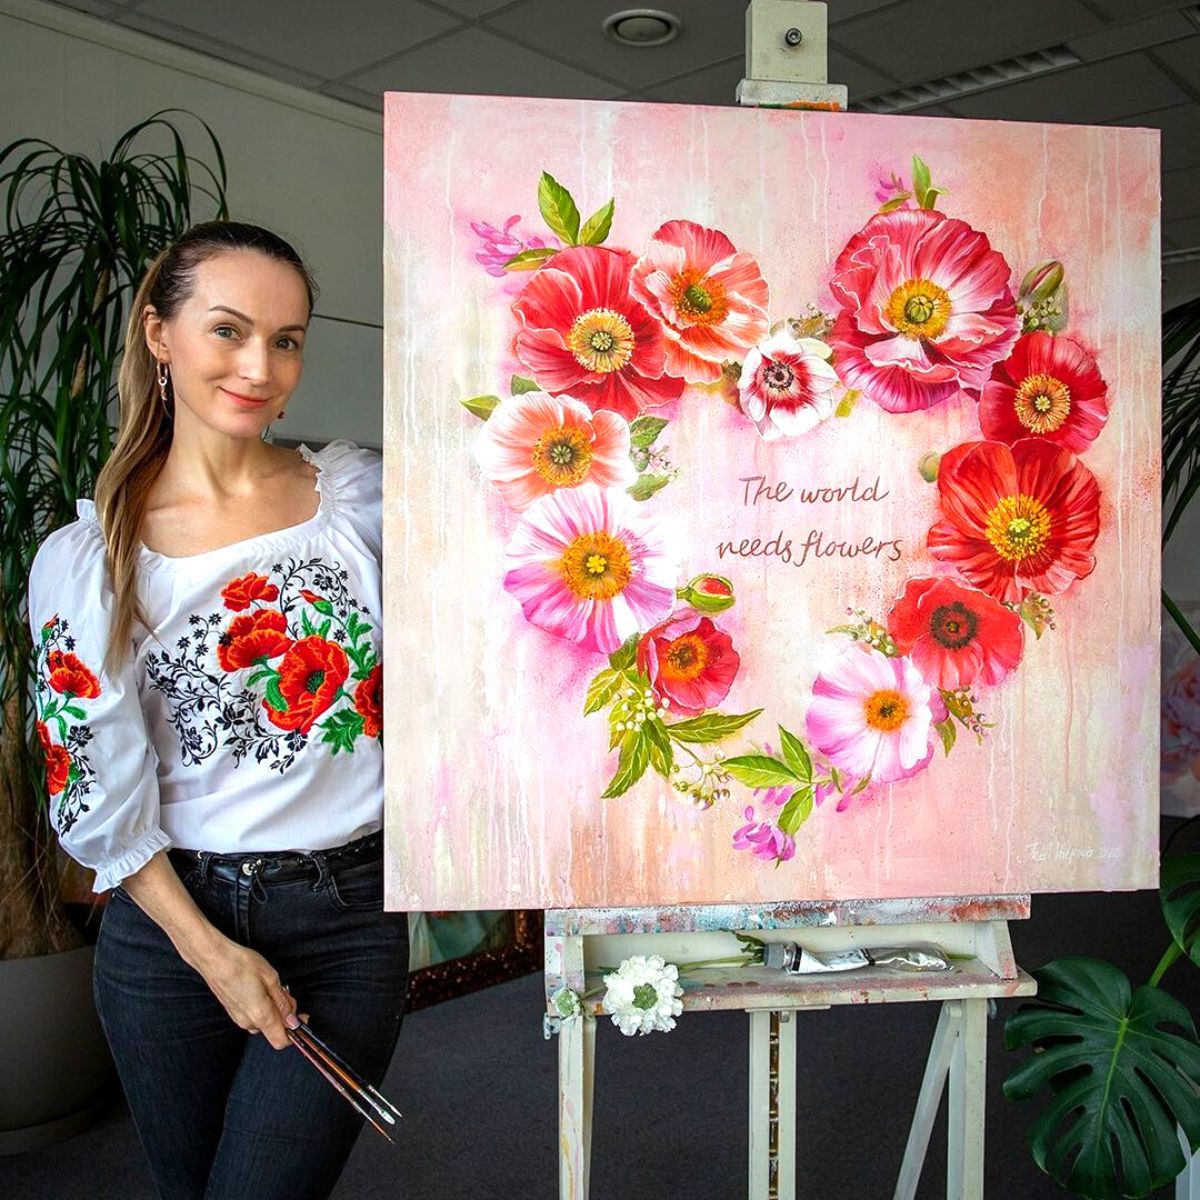 The world needs flowers painting by Ira Volkova